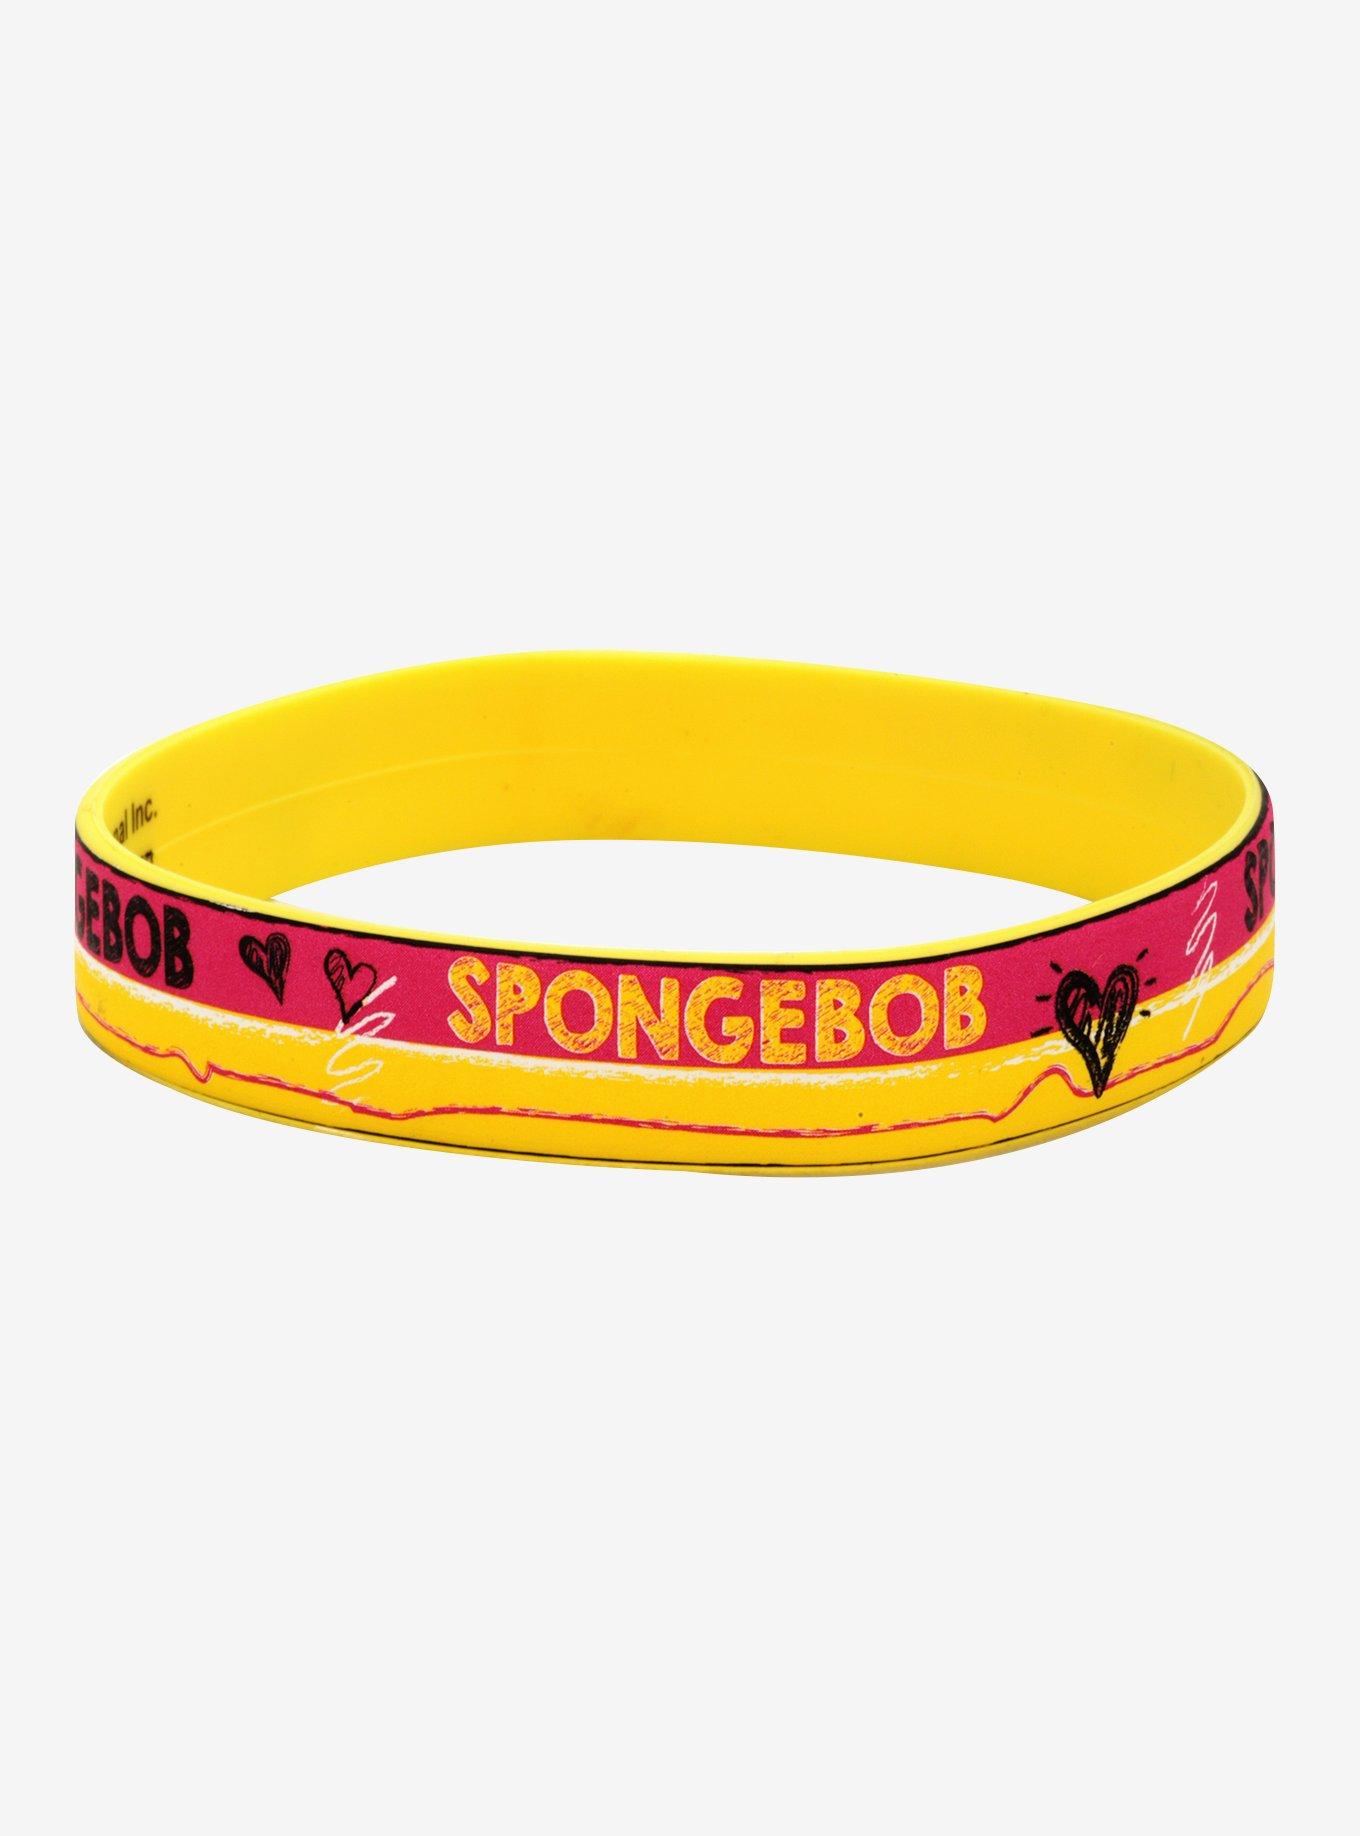 SpongeBob SquarePants Rubber Bracelet, , hi-res